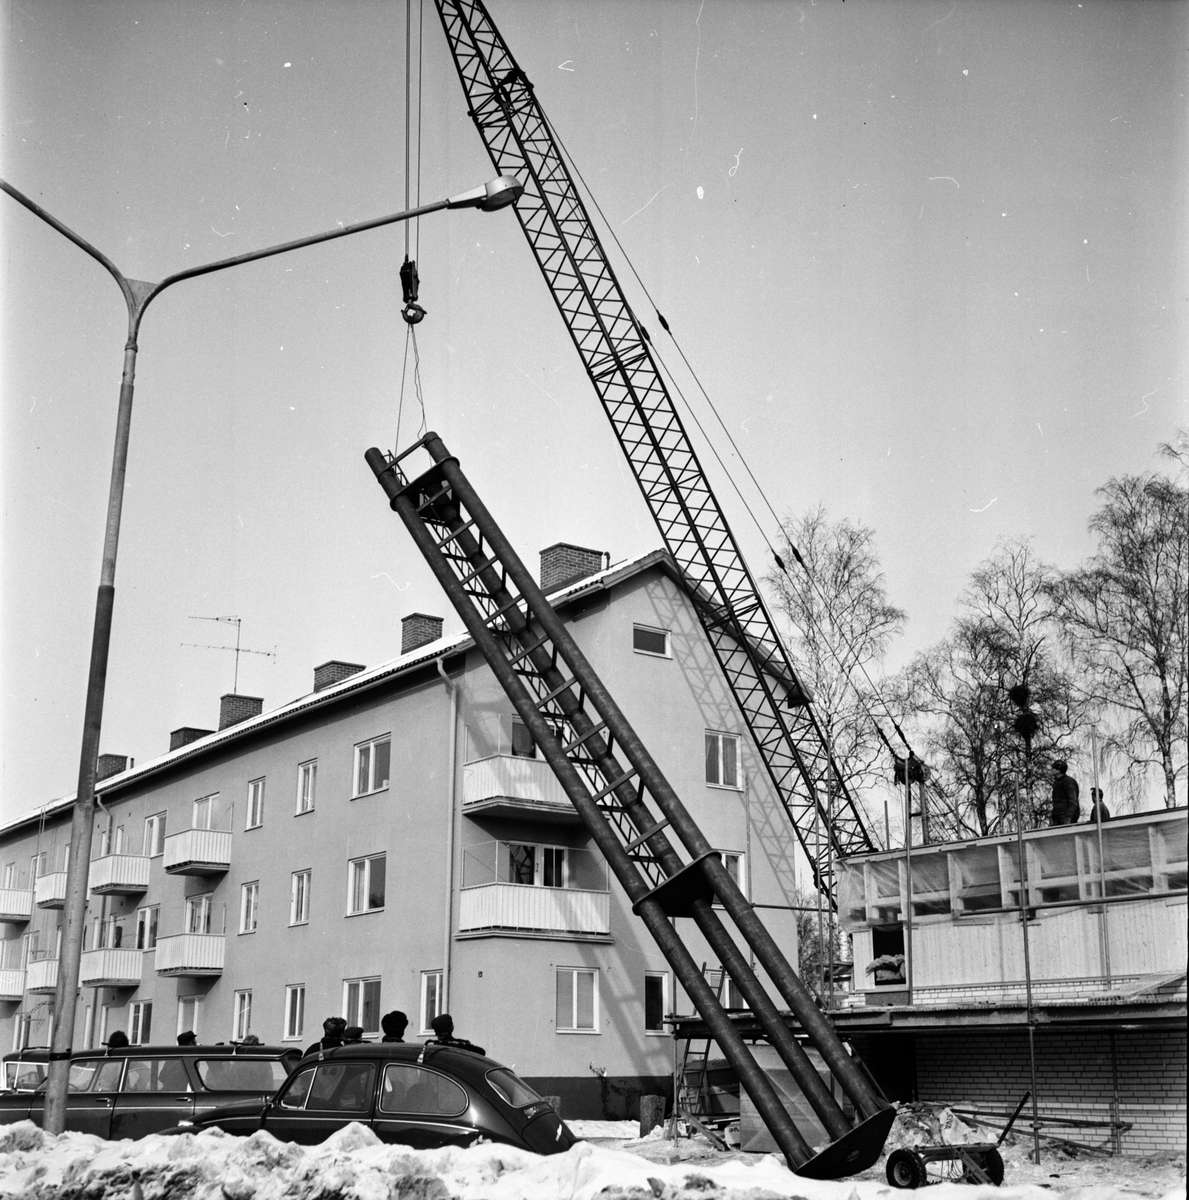 Hallbygge i Arbrå,
Skorstenen på nya Hälsinge Livs reses,
Mars 1972